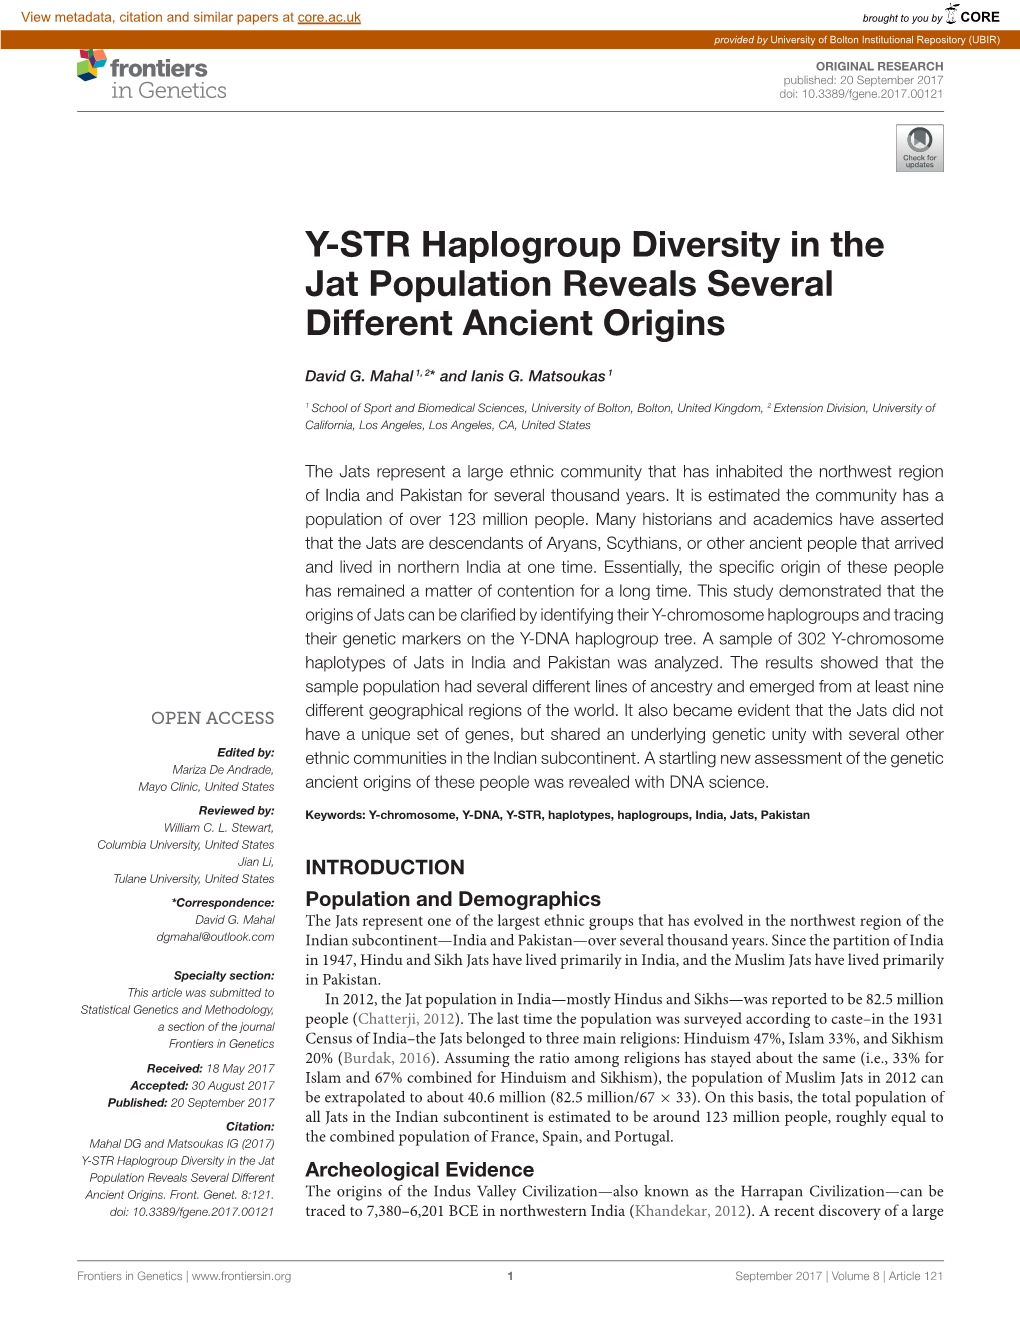 Y-STR Haplogroup Diversity in the Jat Population Reveals Several Different Ancient Origins